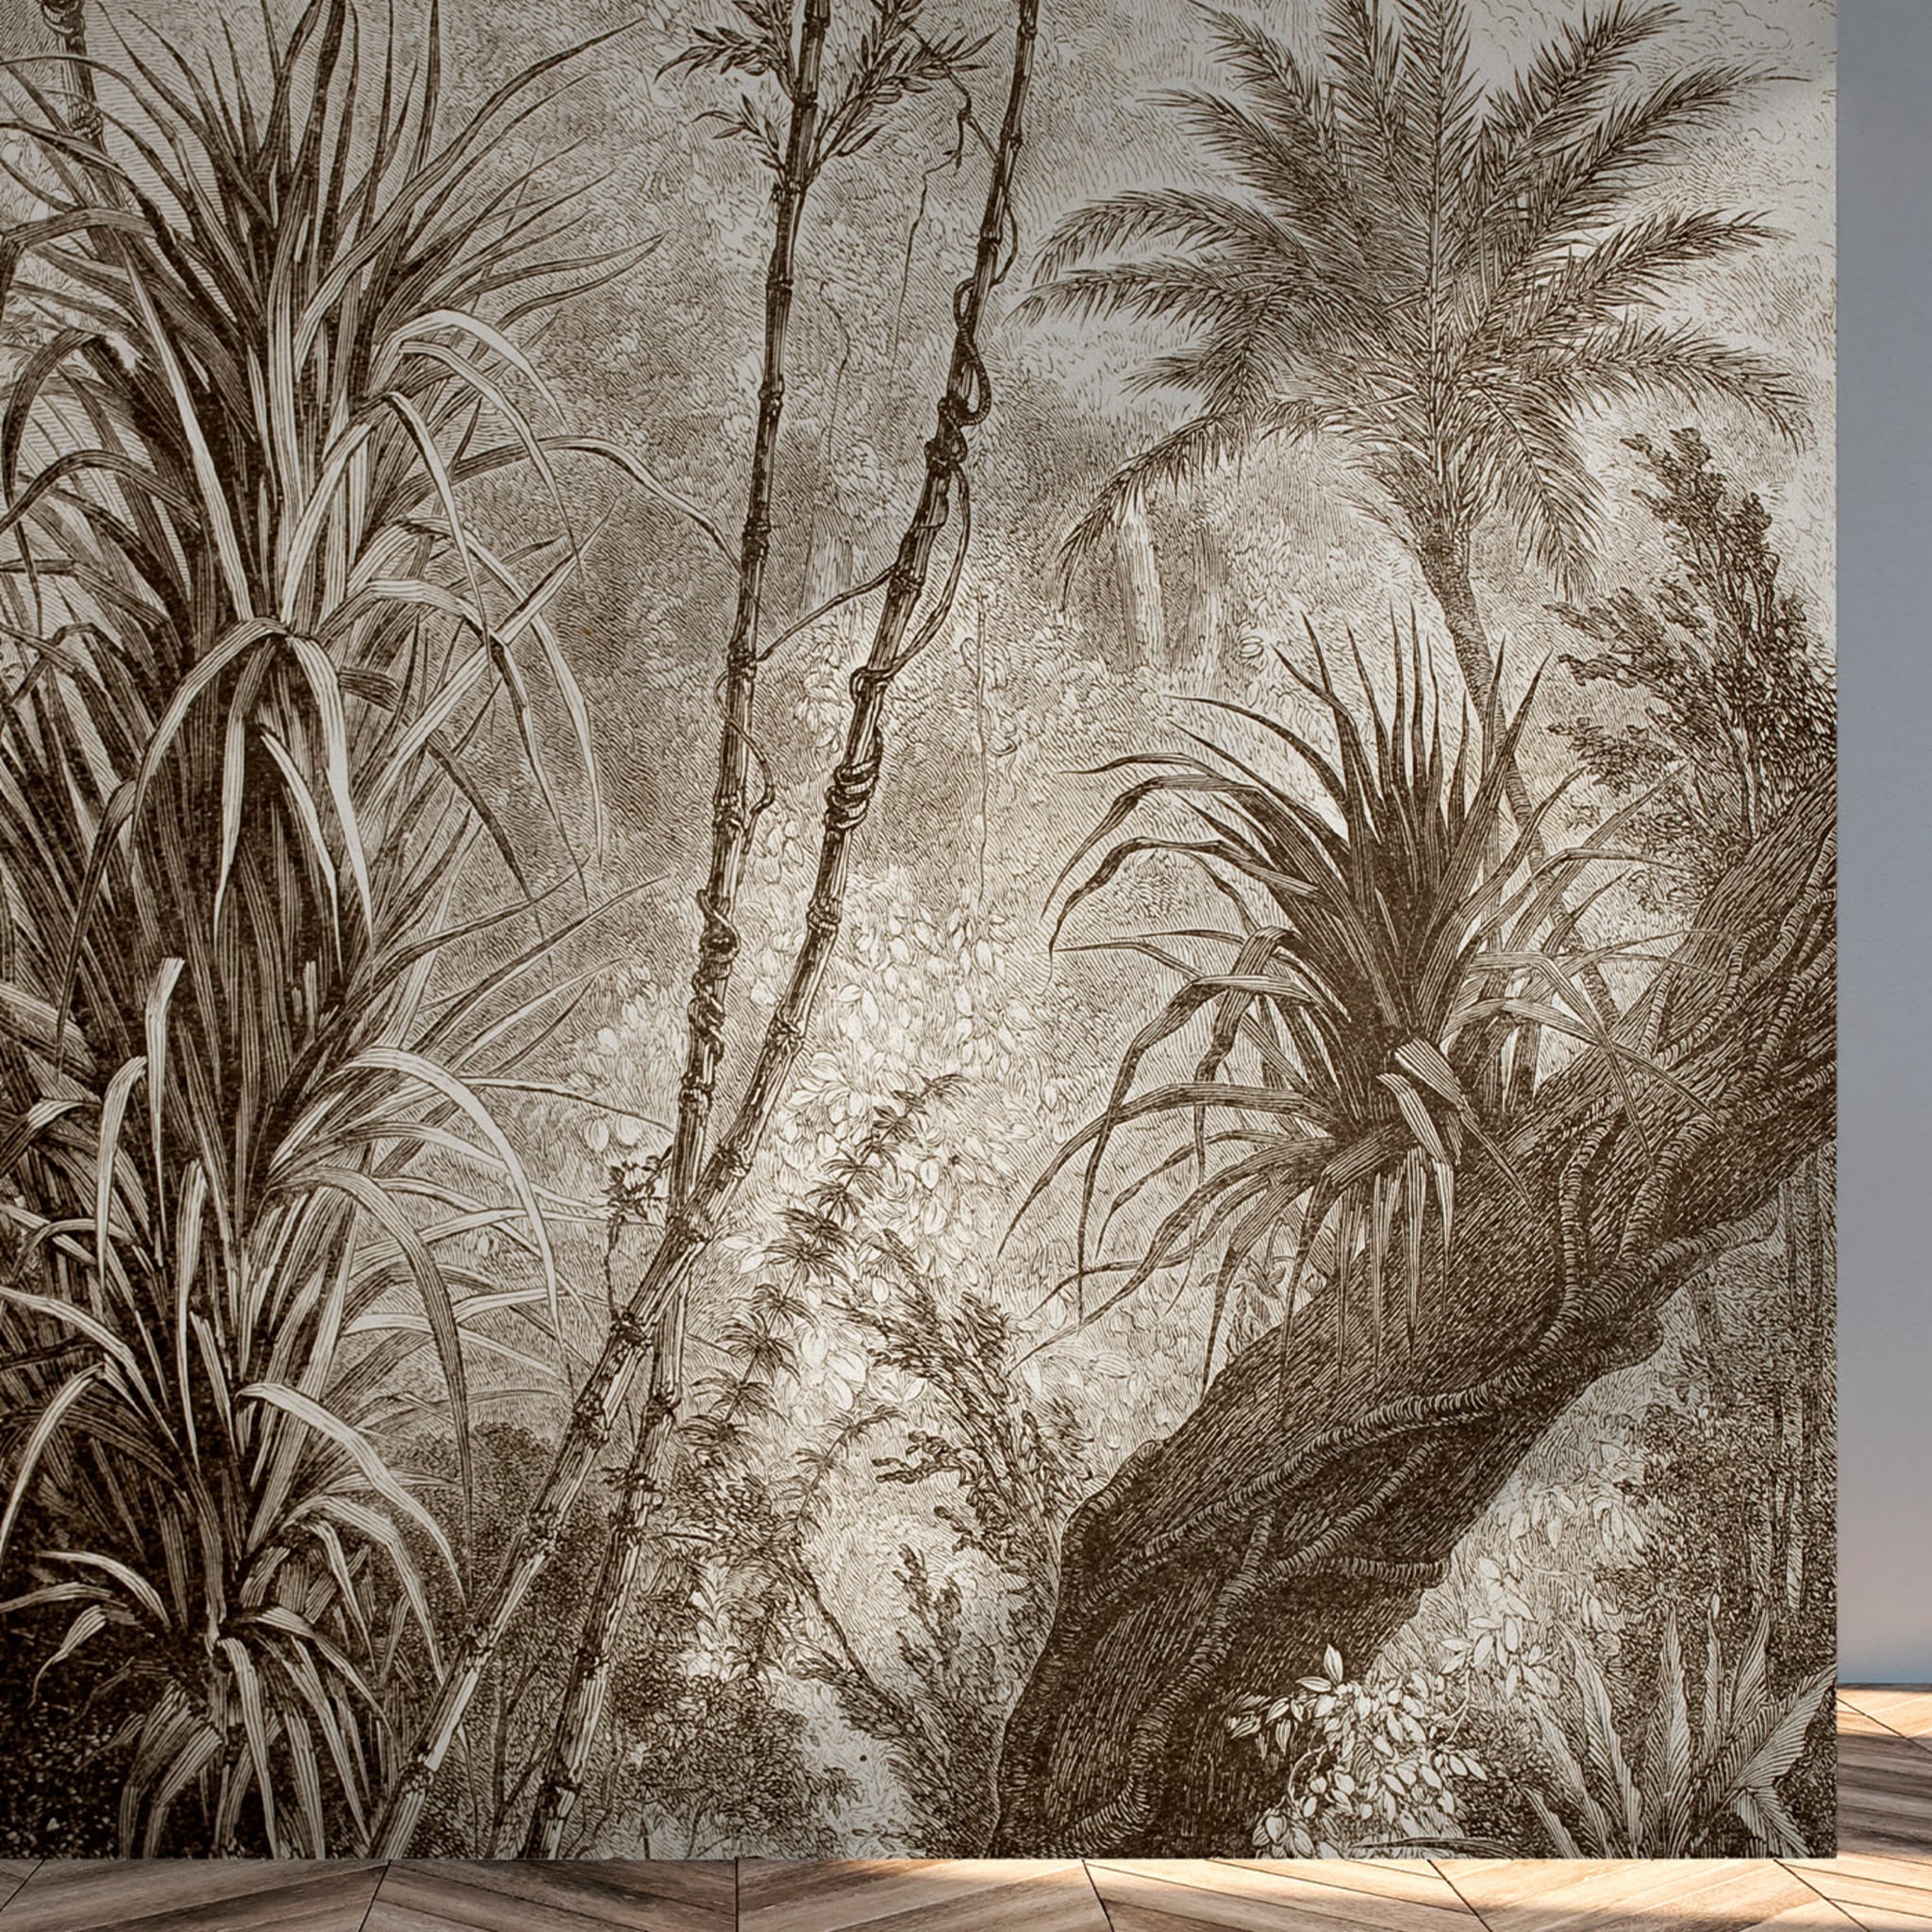 Sepia Jungle Textured Wallpaper - Alternative view 1